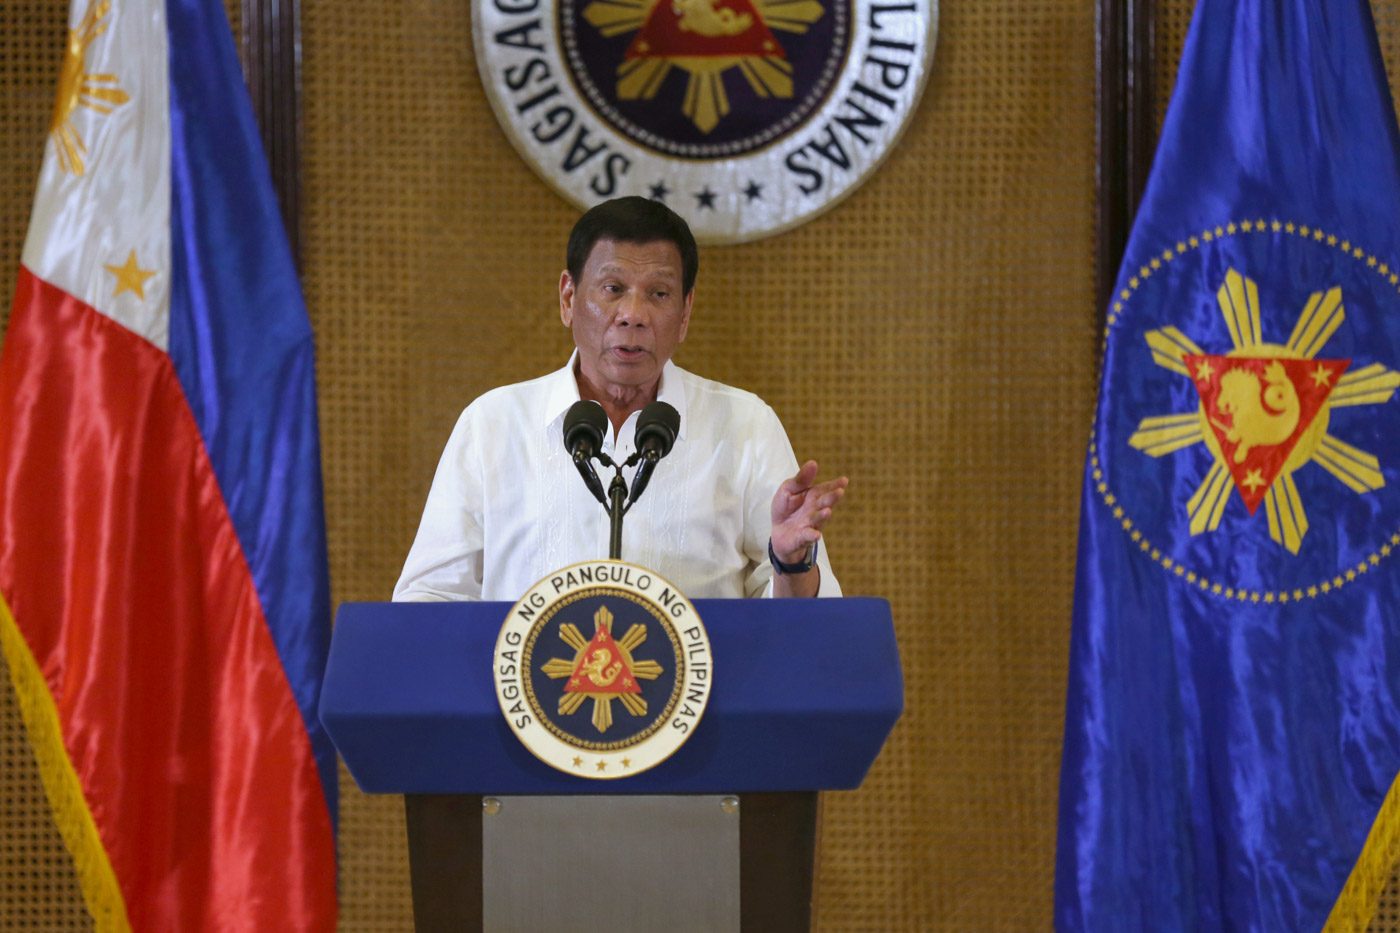 LIVE: Cabinet officials present accomplishments to launch Duterte Legacy Campaign